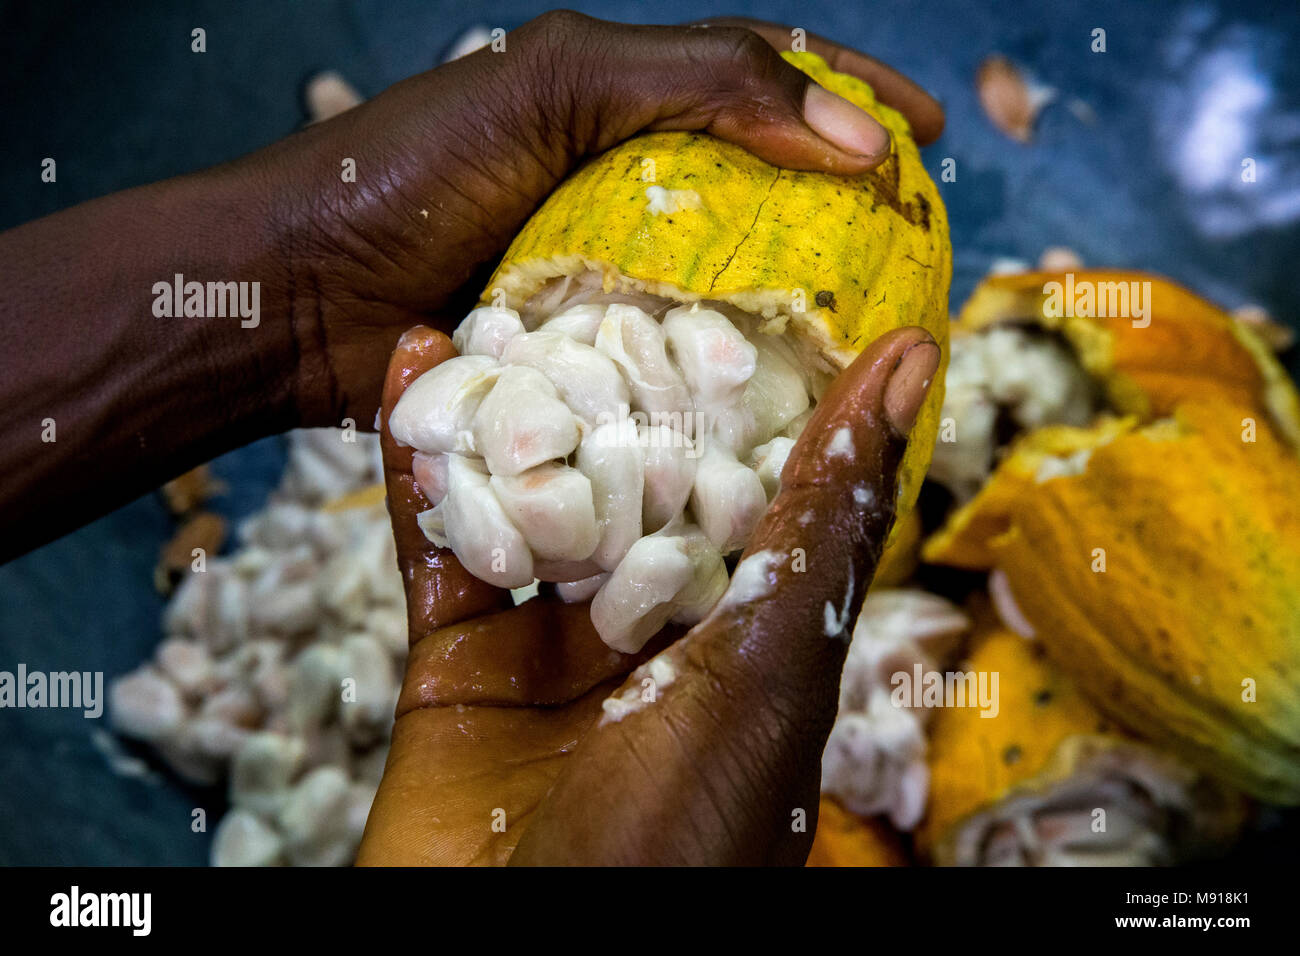 Ivory Coast. Farmer breaking up harvested cocoa pods. Stock Photo